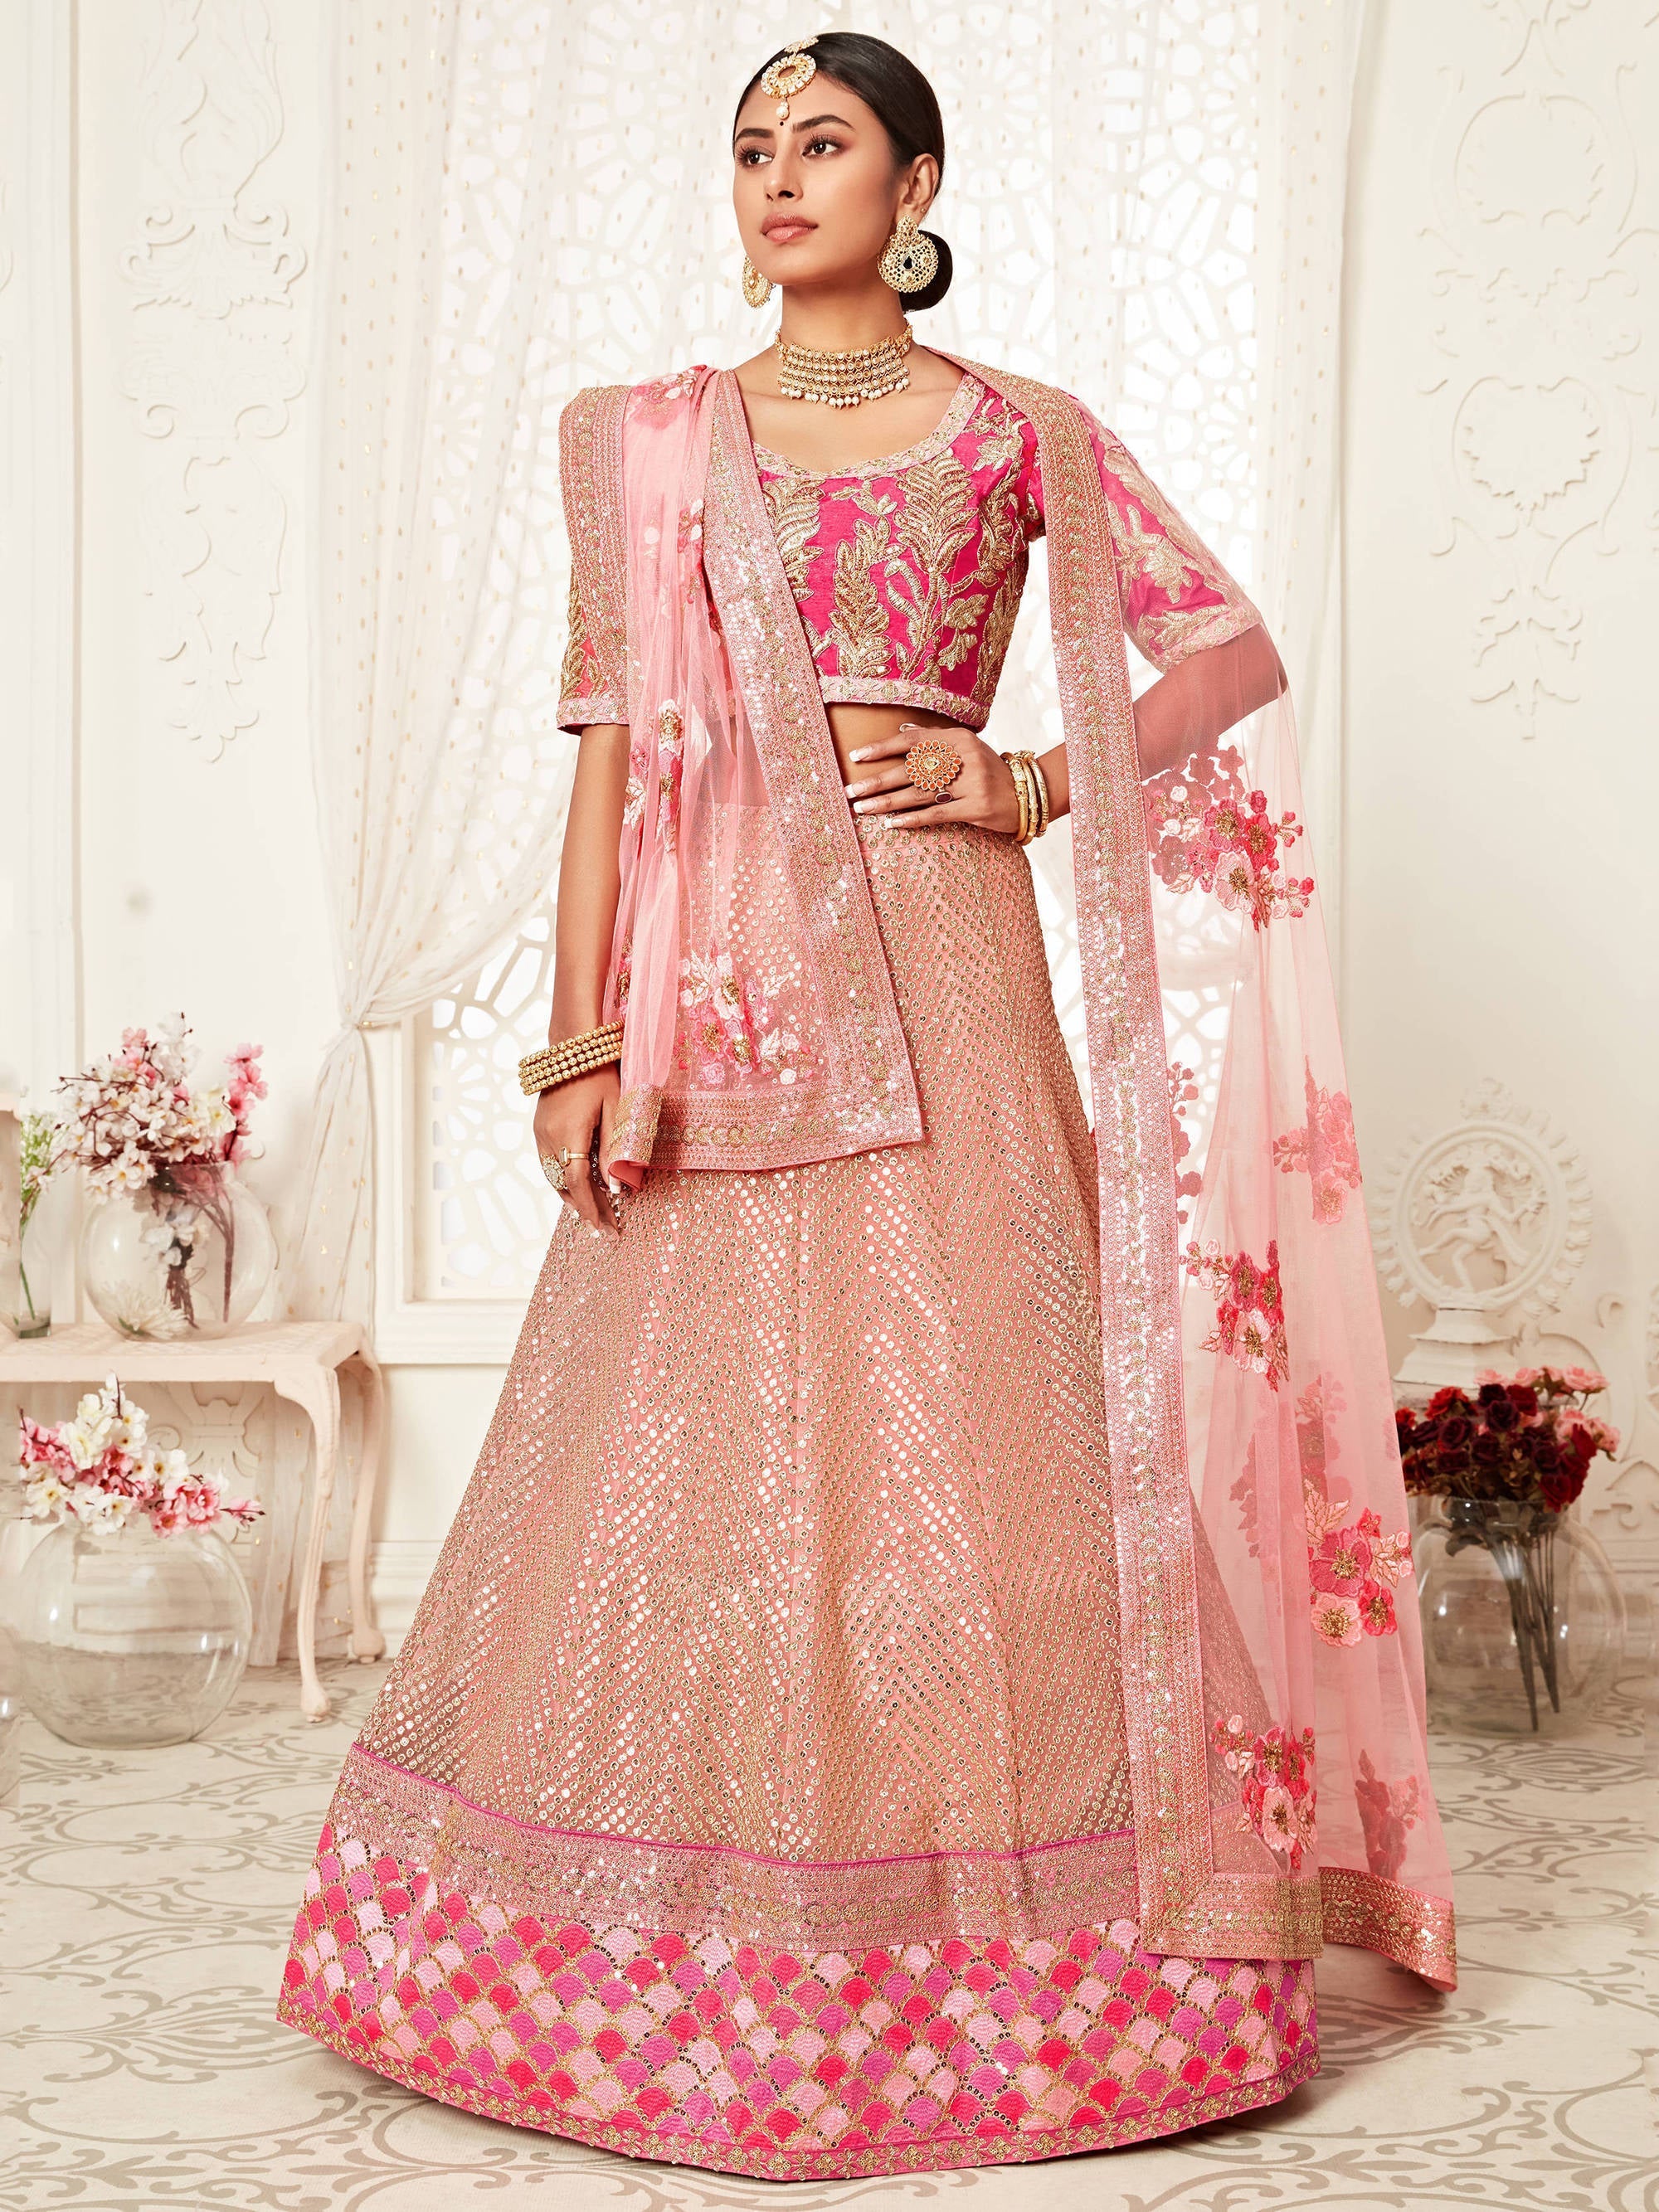 Mesmerizing Pink Embroidery Net Wedding Lehenga Choli With Dupatta